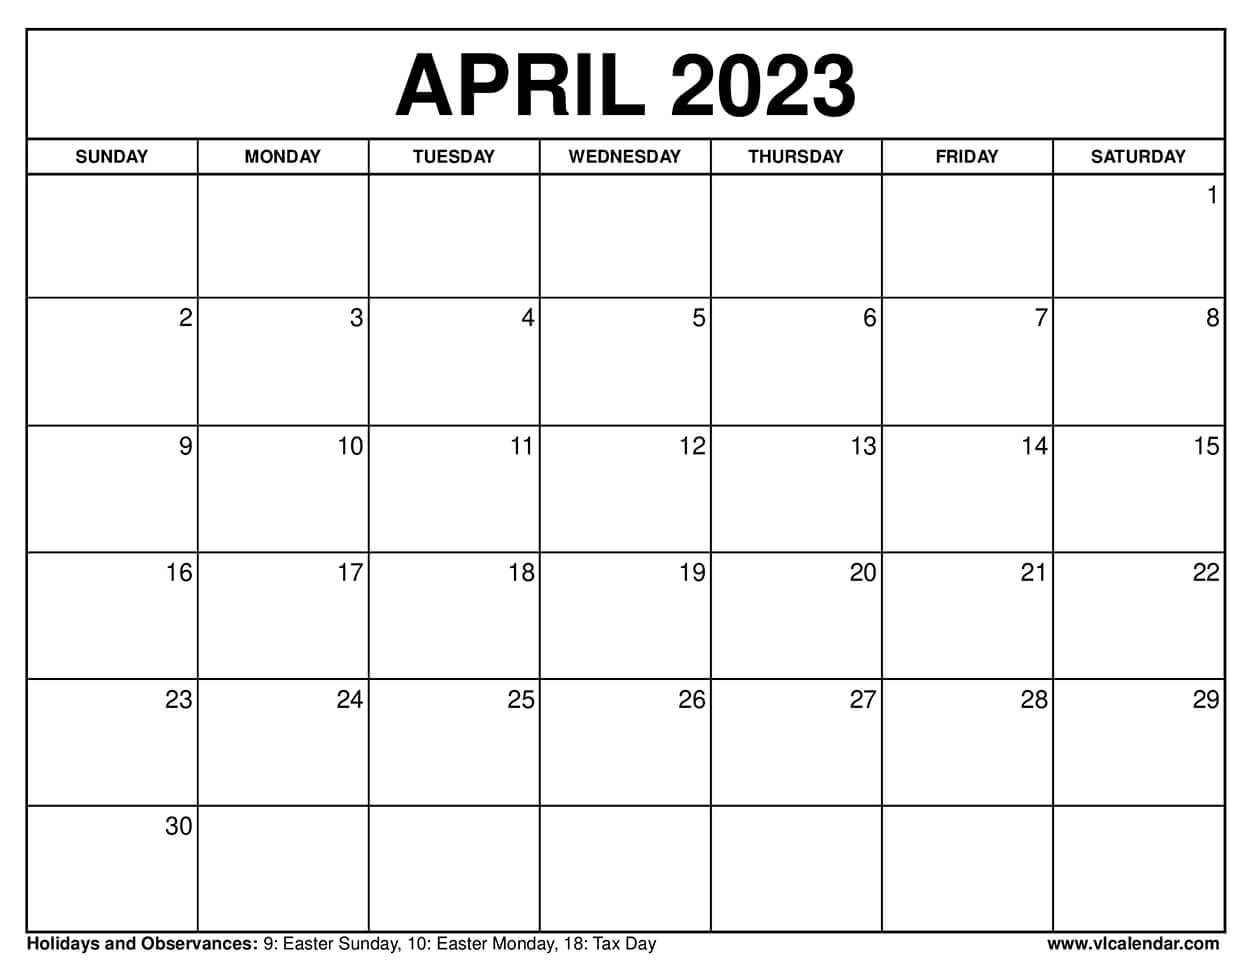 april-2023-calendars-printable-with-holidays